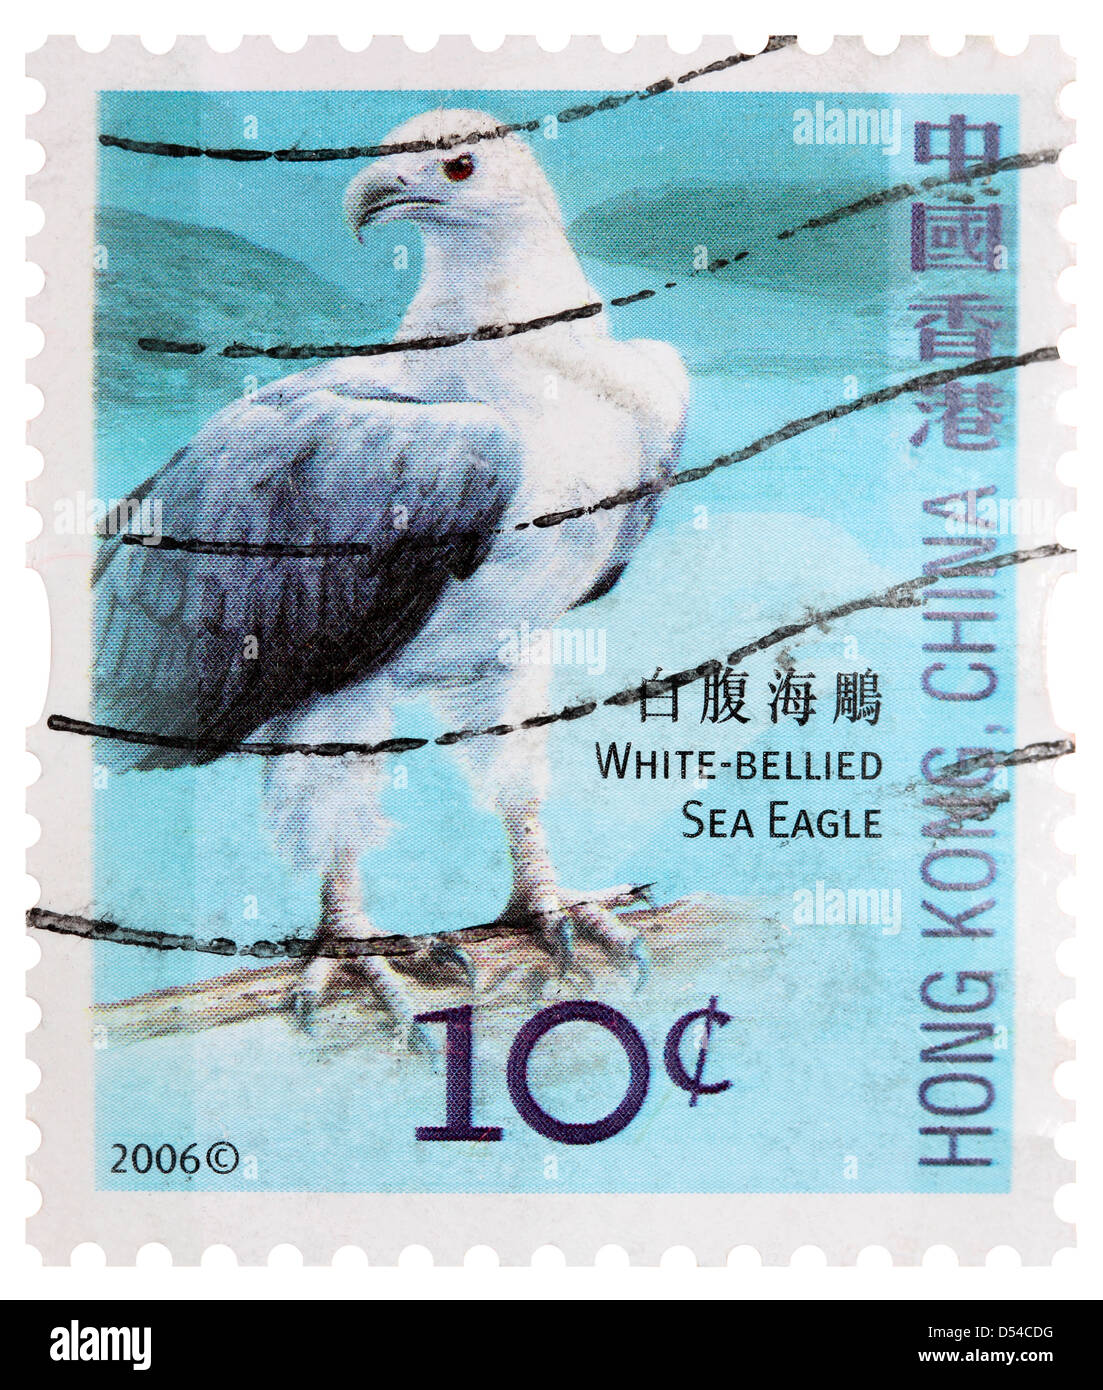 Gebrauchte zehn Hong Kong Cent Briefmarke - White-Bellied Sea Eagle Stockfoto